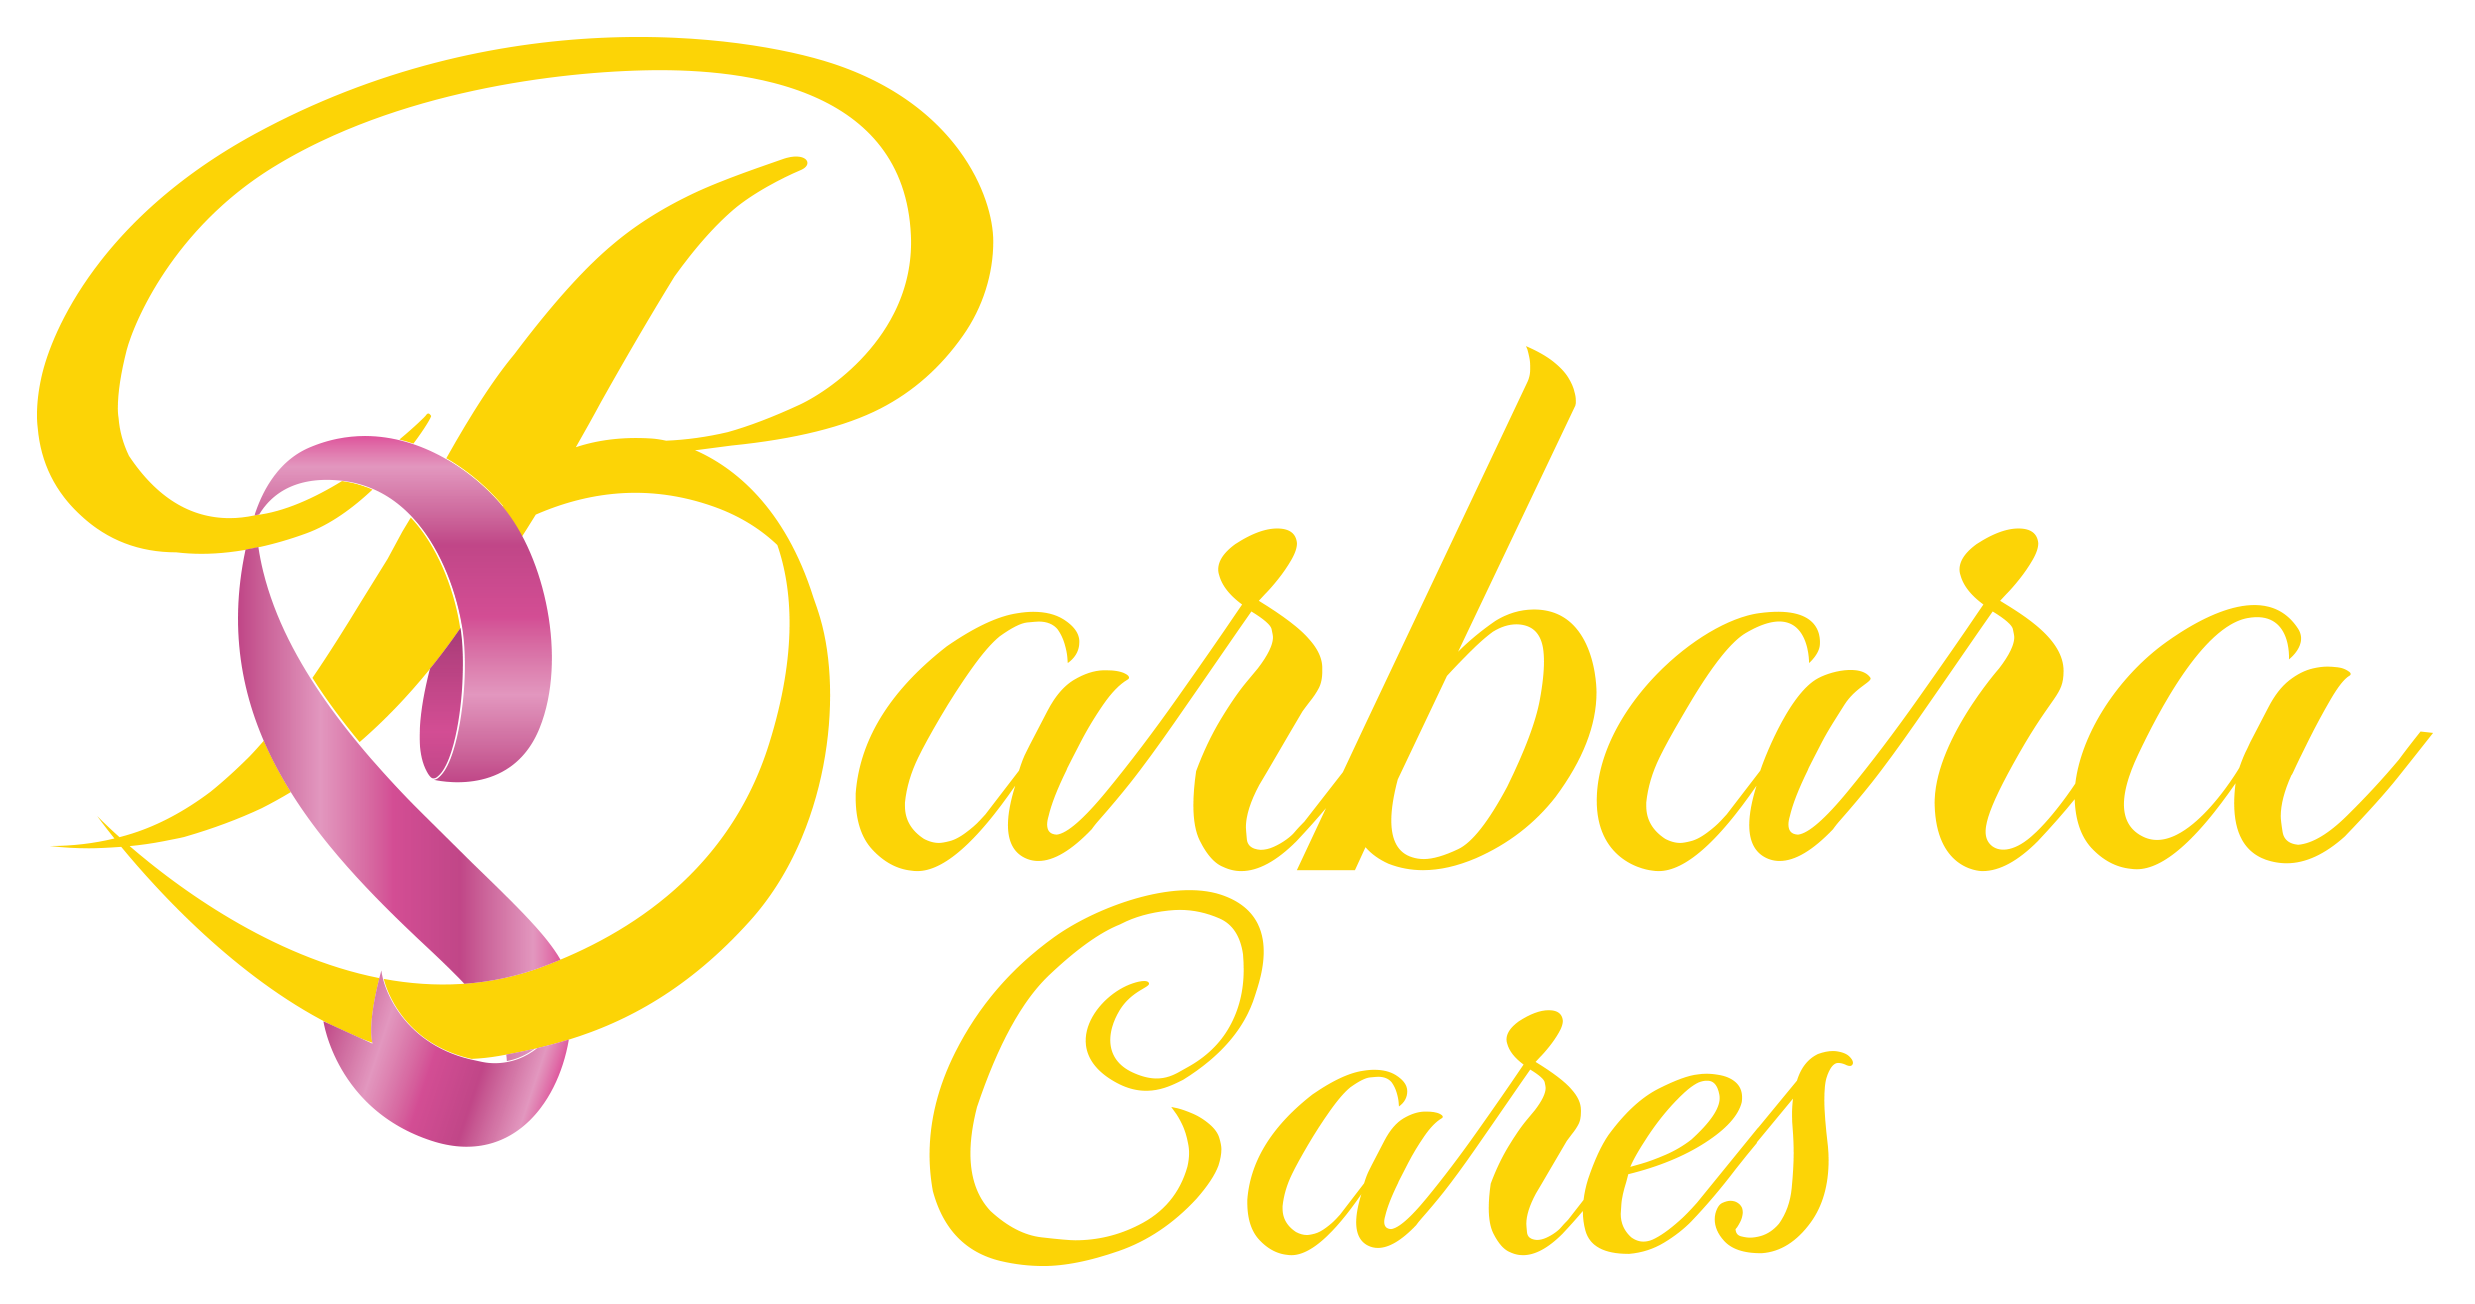 BarbaraCares logo